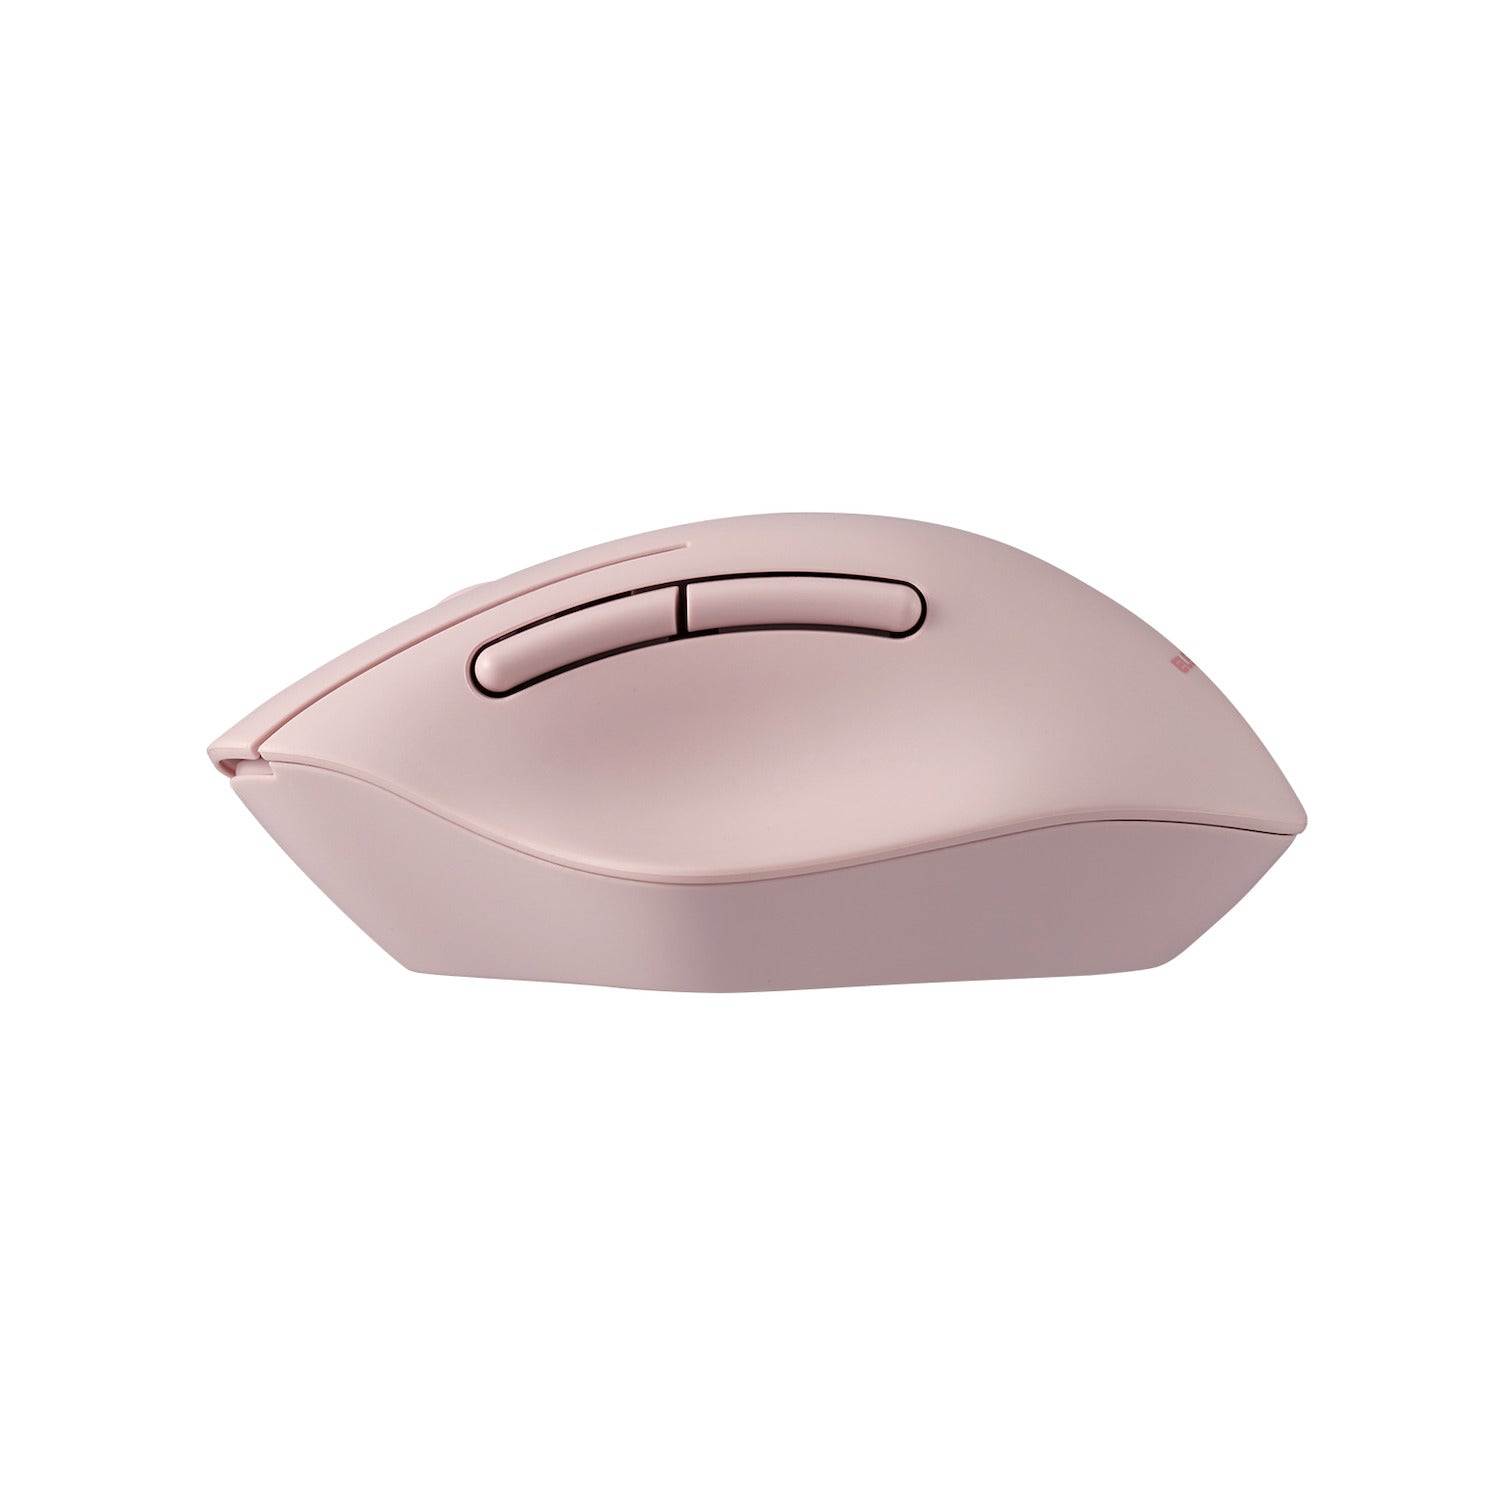 SH20 Ergonomic Mouse - Wireless